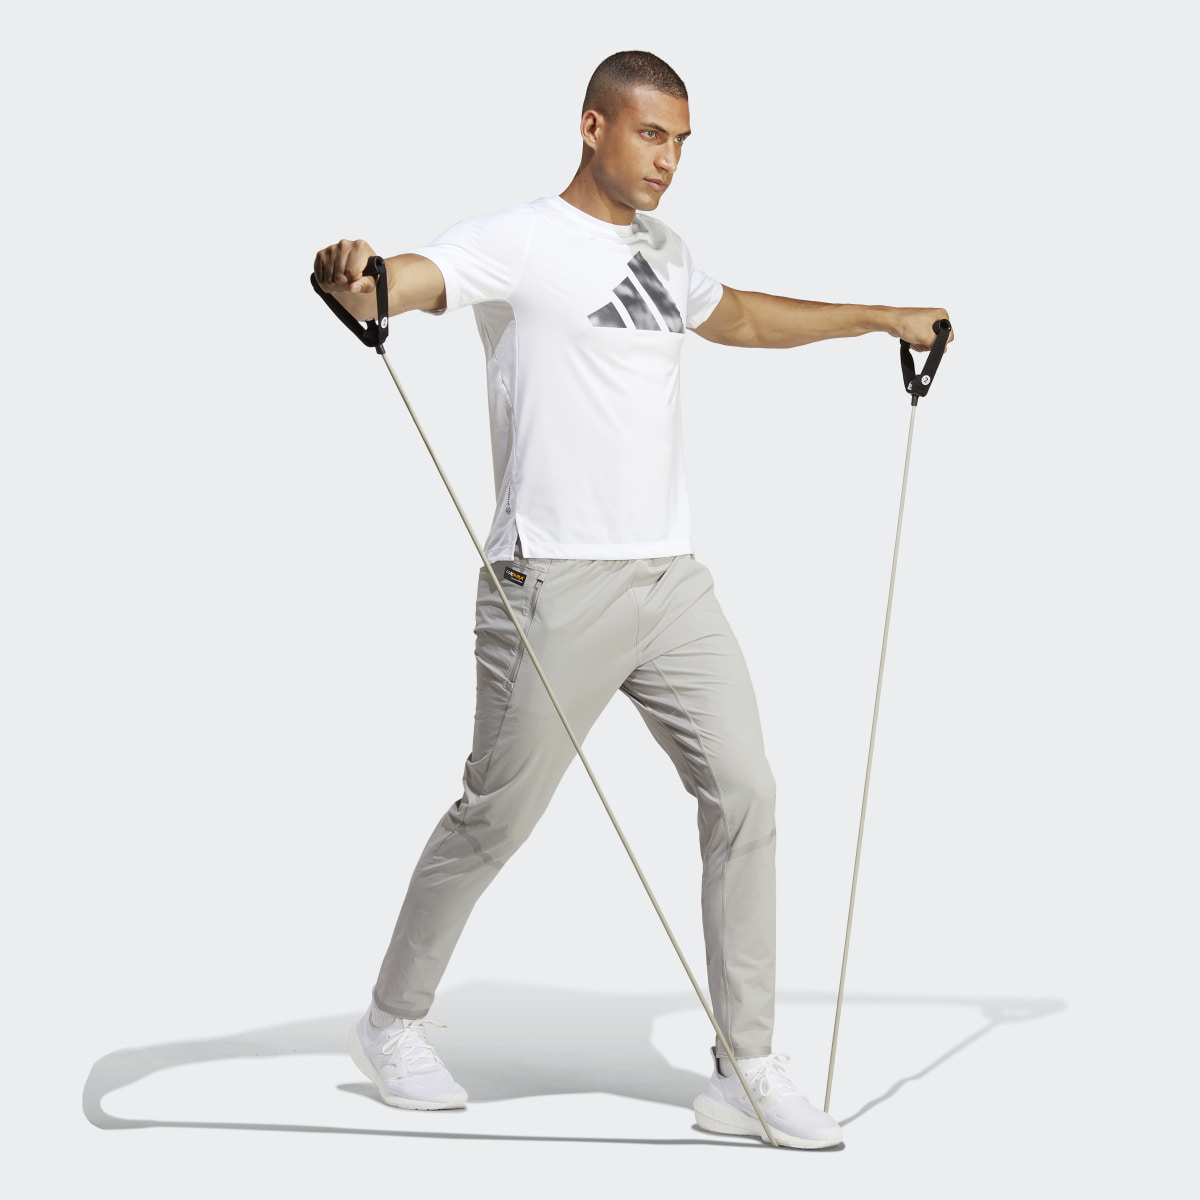 Adidas Designed for Training CORDURA® Workout Pants. 4